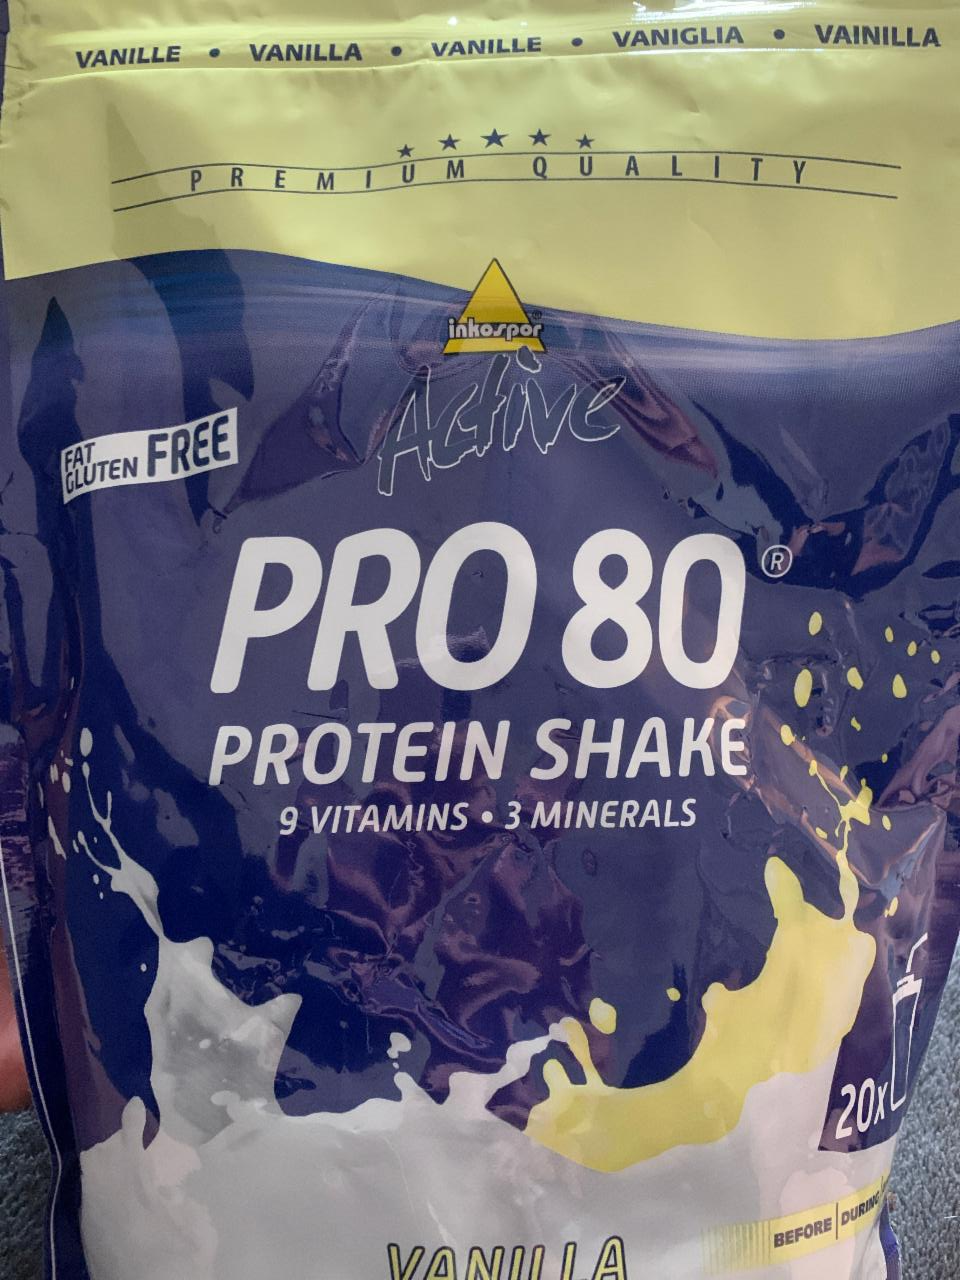 Fotografie - Protein shake pro 80 vanilla InkoSpor Active